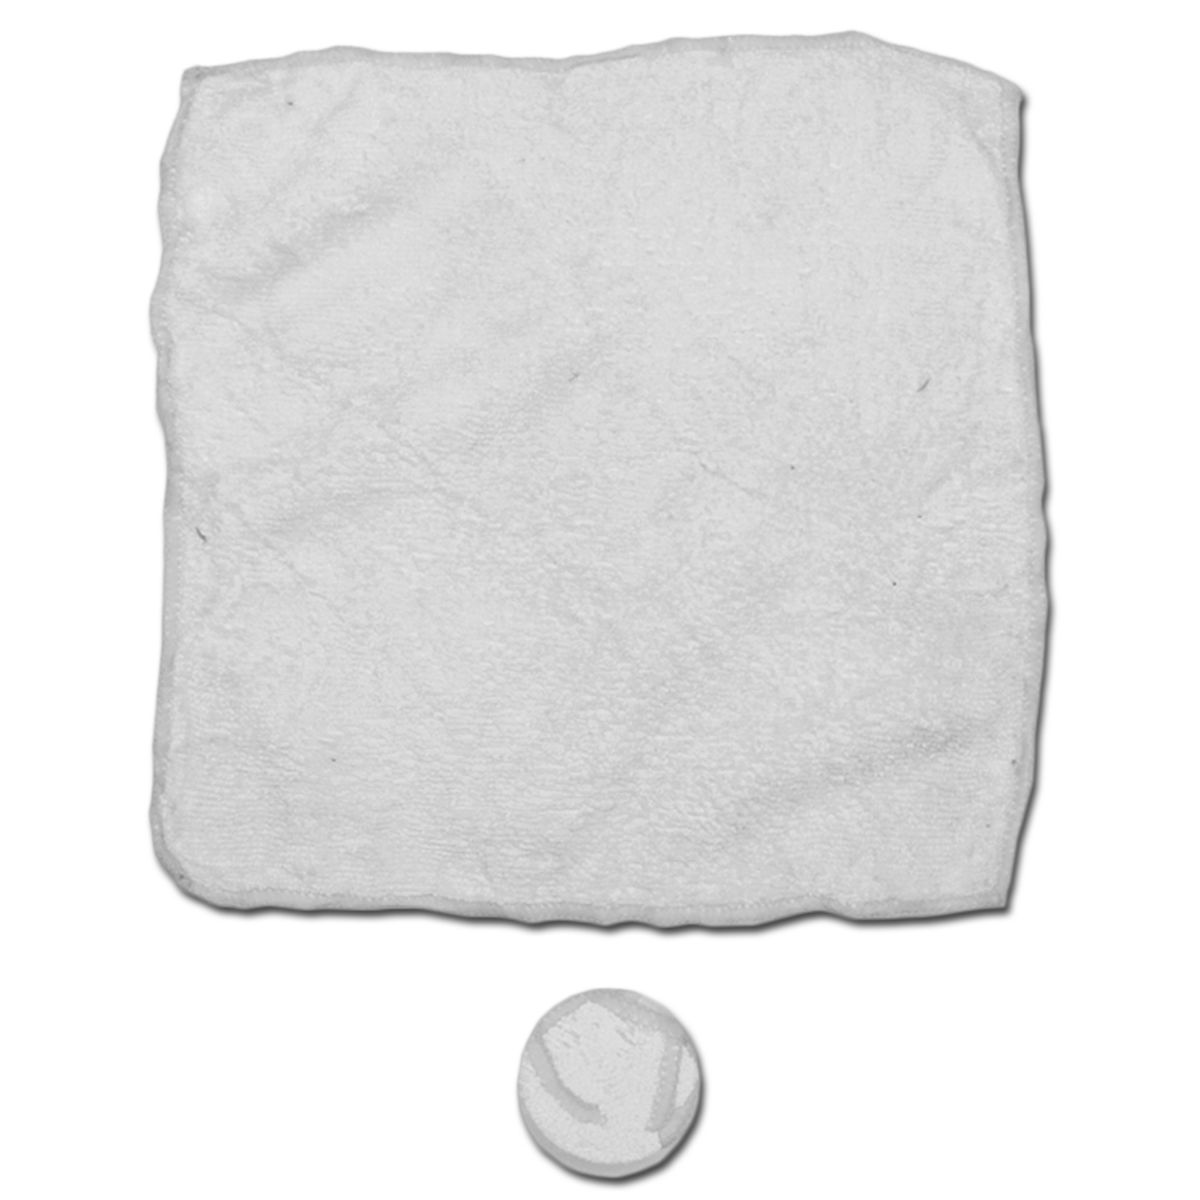 Microfiber Towels 5 Pieces white | Microfiber Towels 5 Pieces white ...